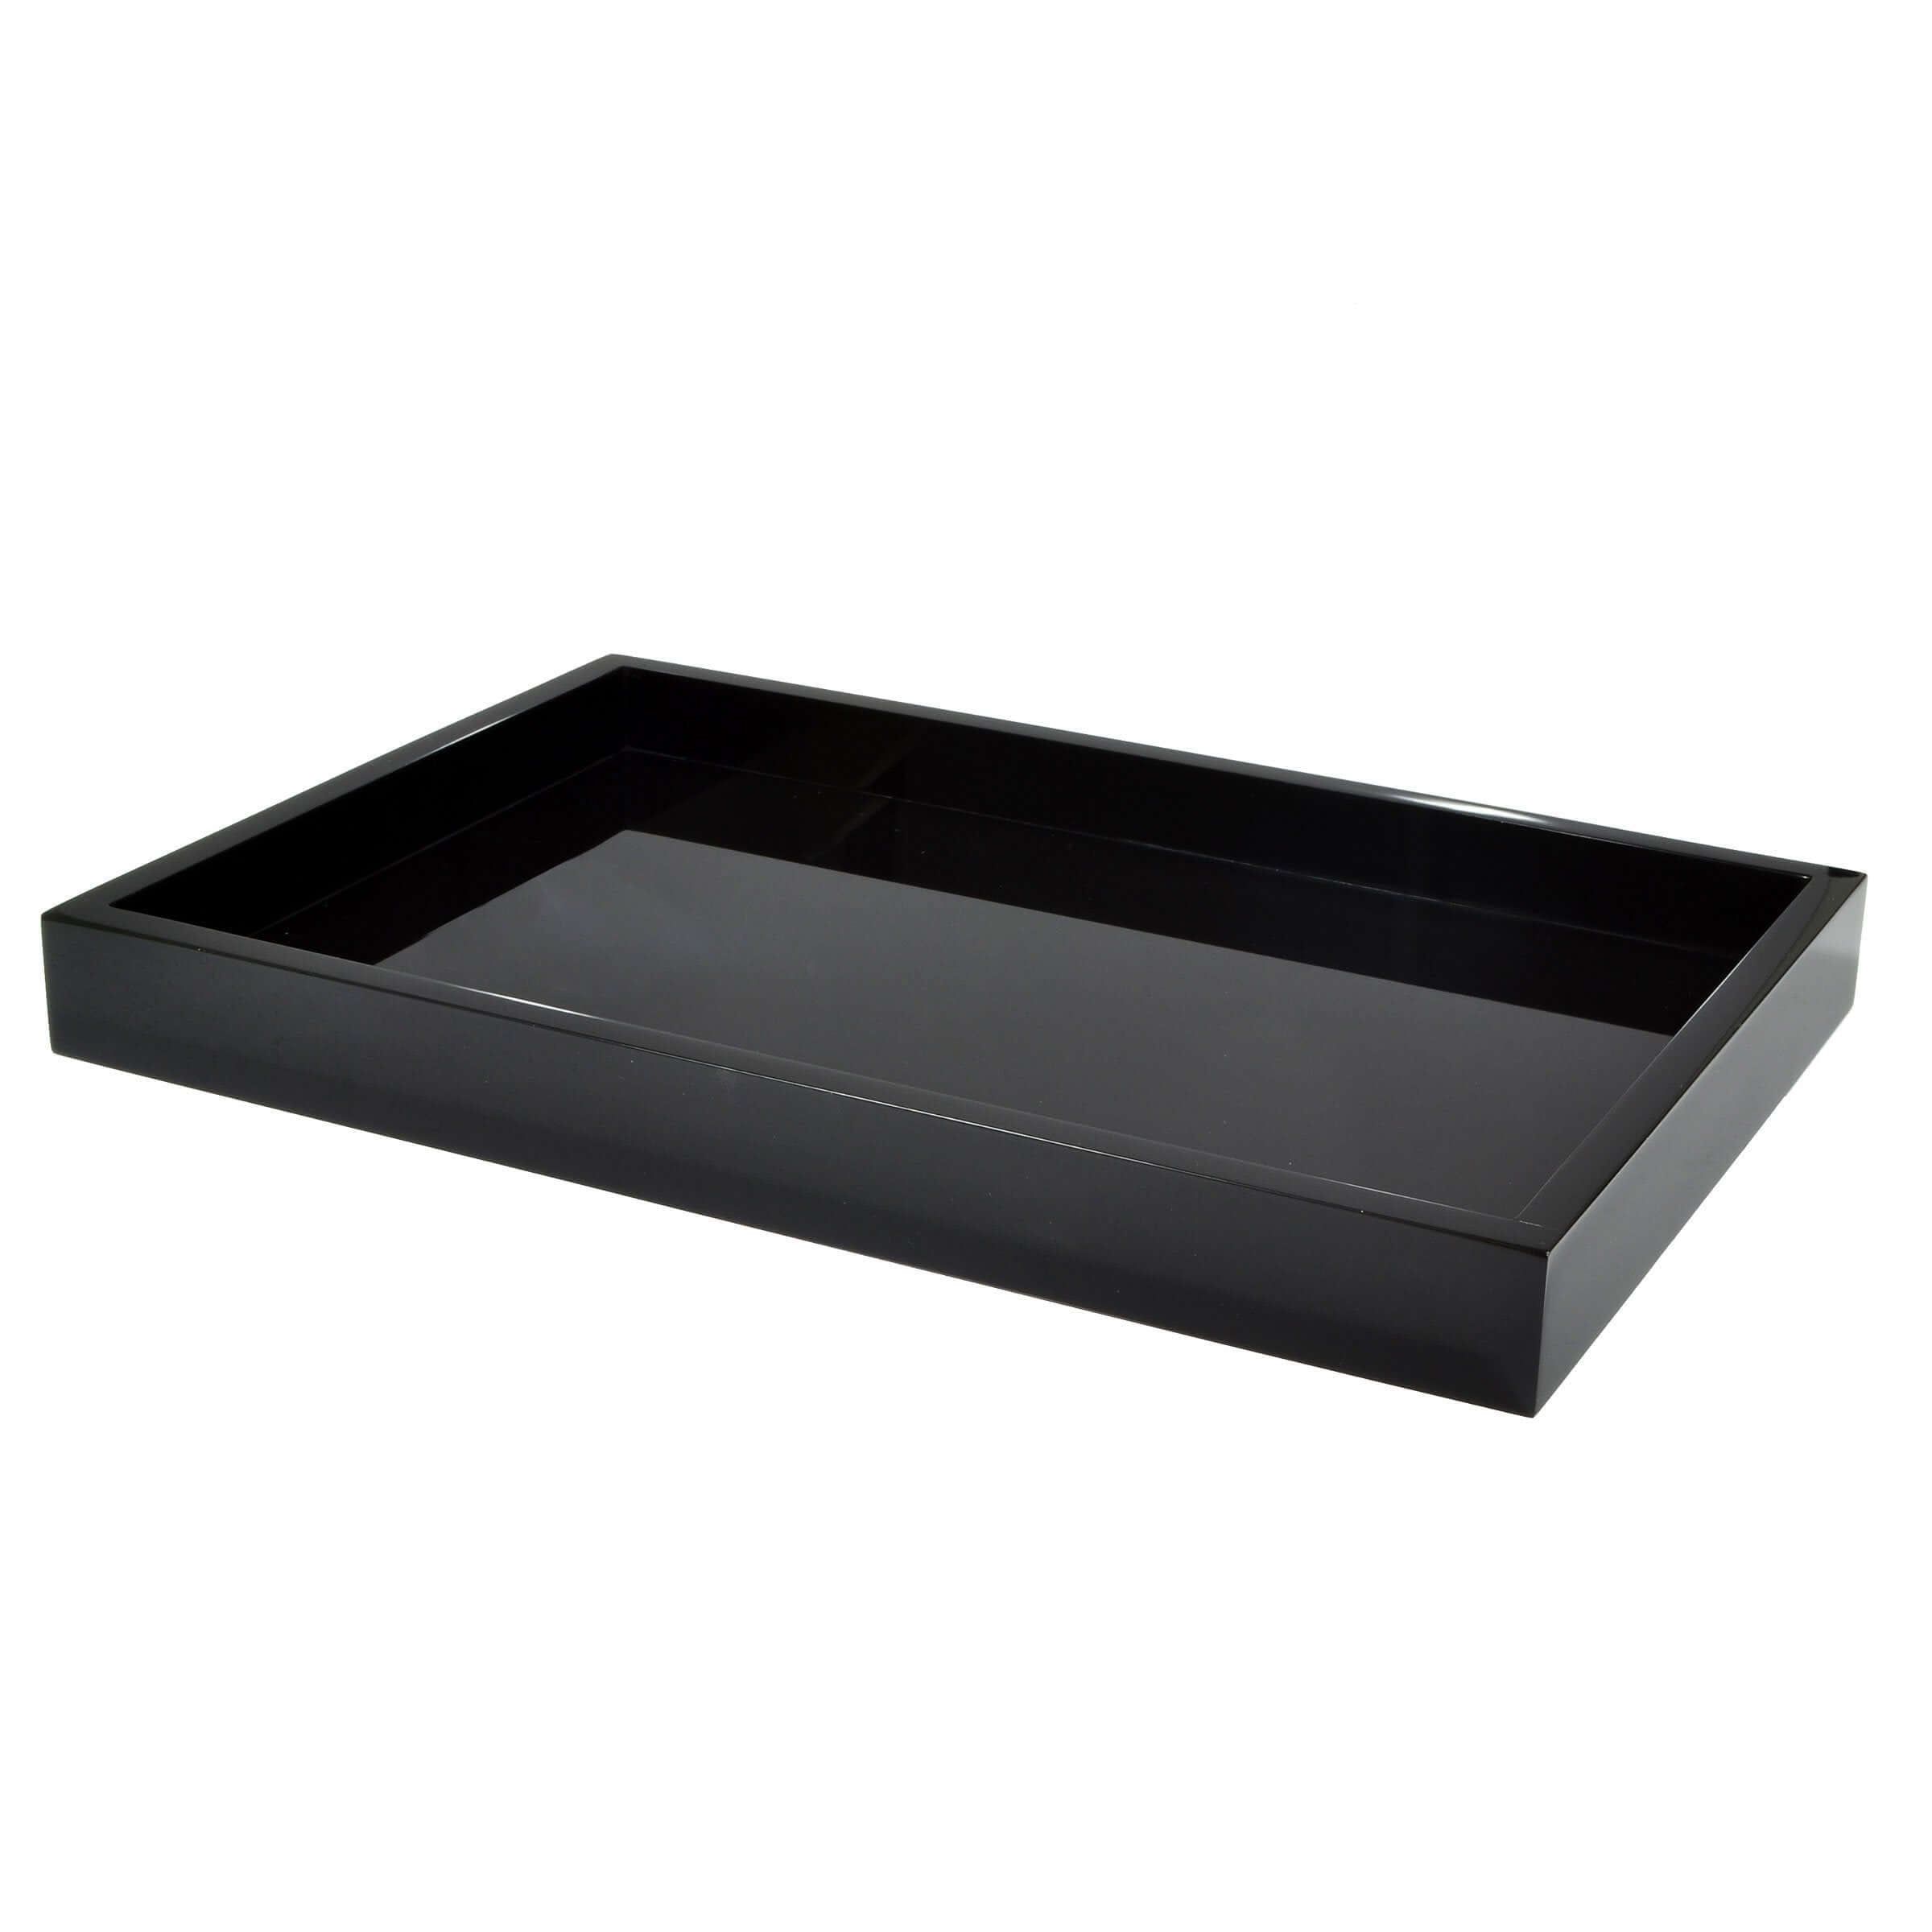 Mike + Ally - Ice Black Large Vanity tray - 31517 - Black - 